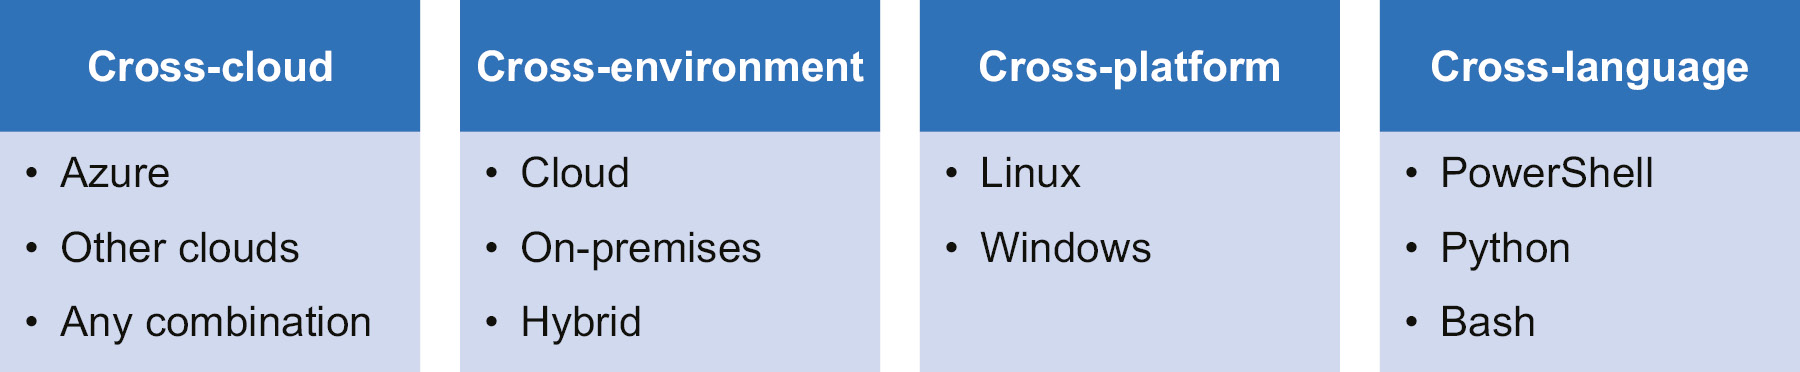 Azure Automation features, including Cross-cloud, Cross-environment, Cross-platform, and cross-language.